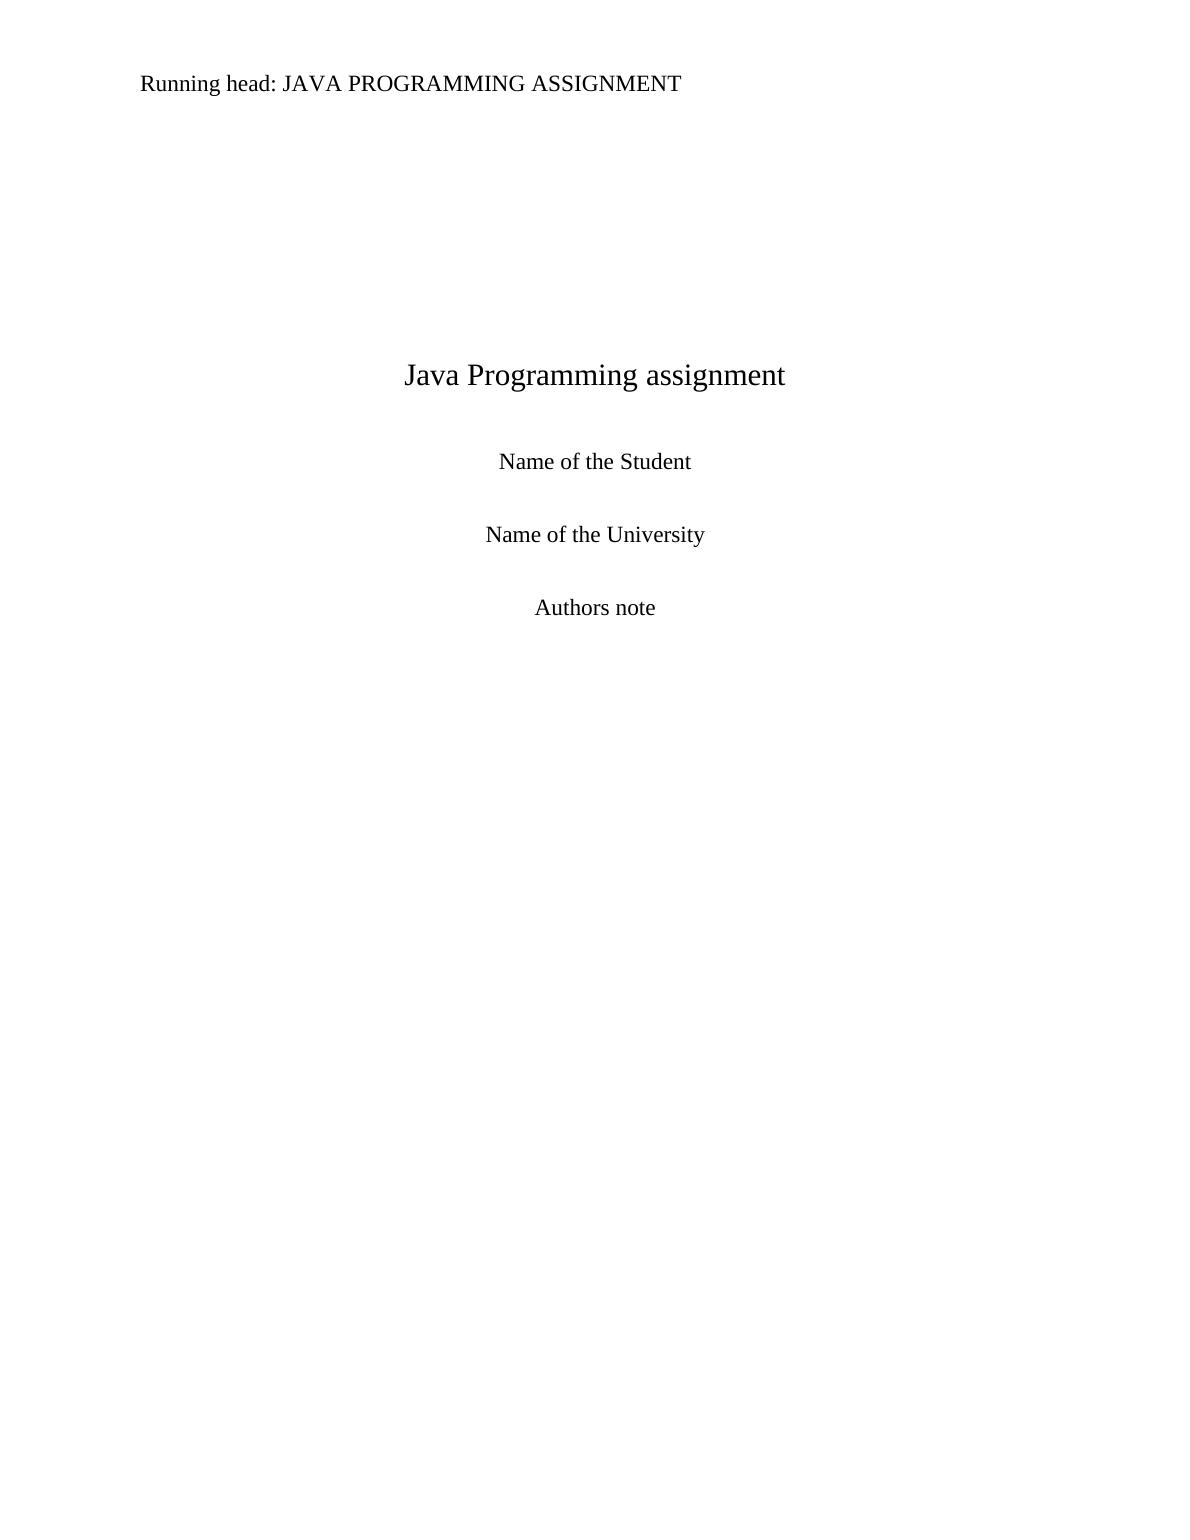 Java Programming | Assignment_1